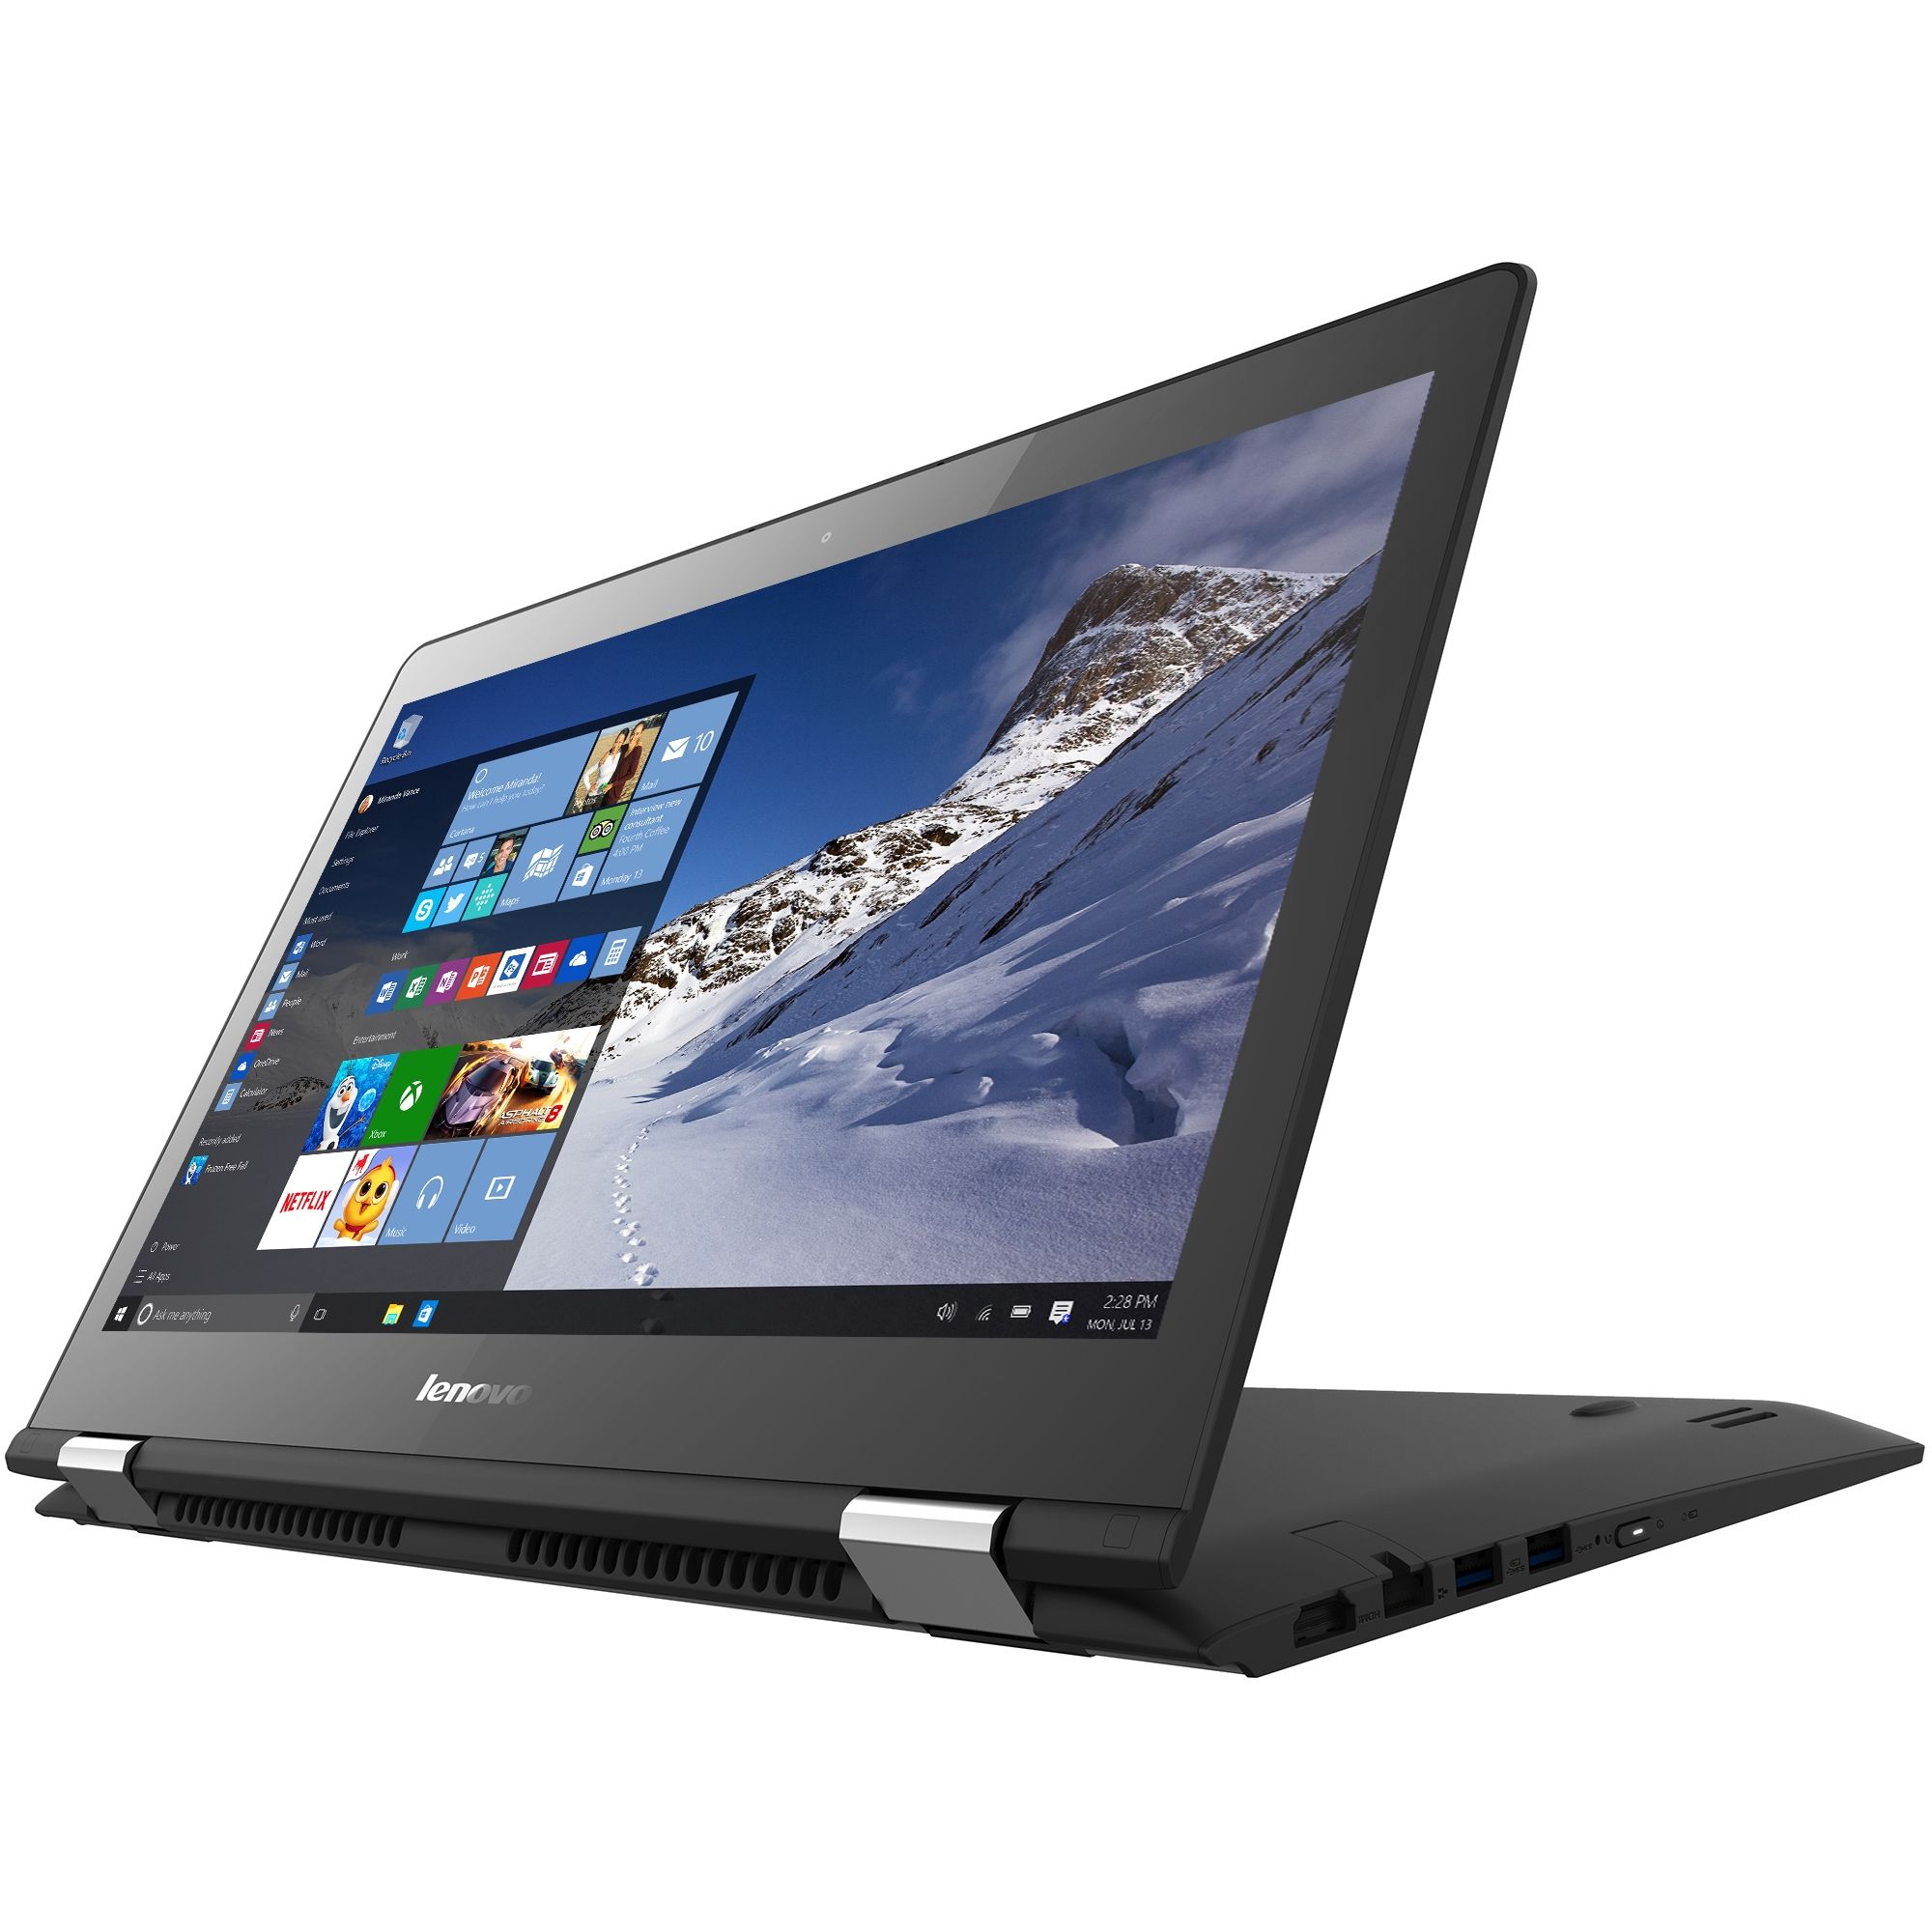  Laptop 2 in 1 Lenovo Yoga 500, Intel Core i5-6200U, 4GB DDR3, HDD 1TB, Intel HD Graphics, Windows 10 Home 